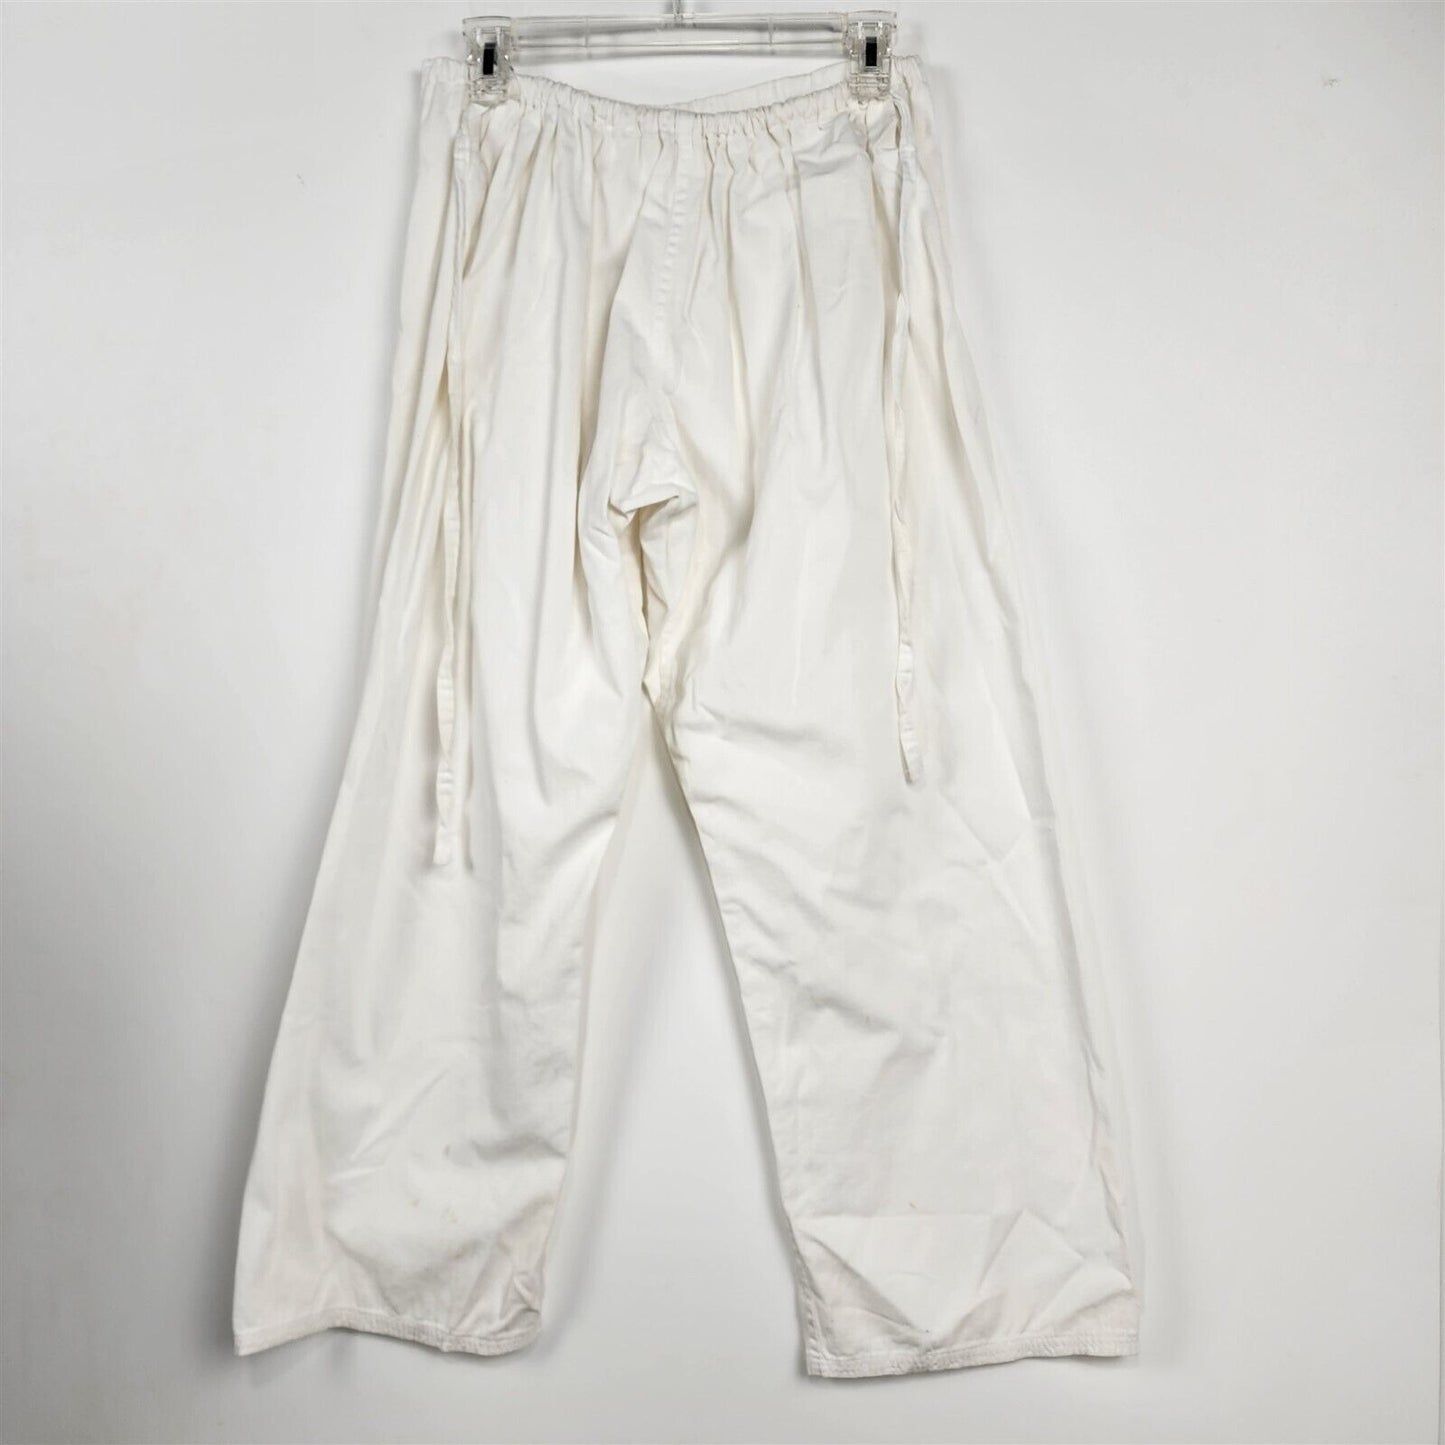 Vintage Genbudo Taekwondo Karate Uniform Top & Pants Martial Arts Size 6